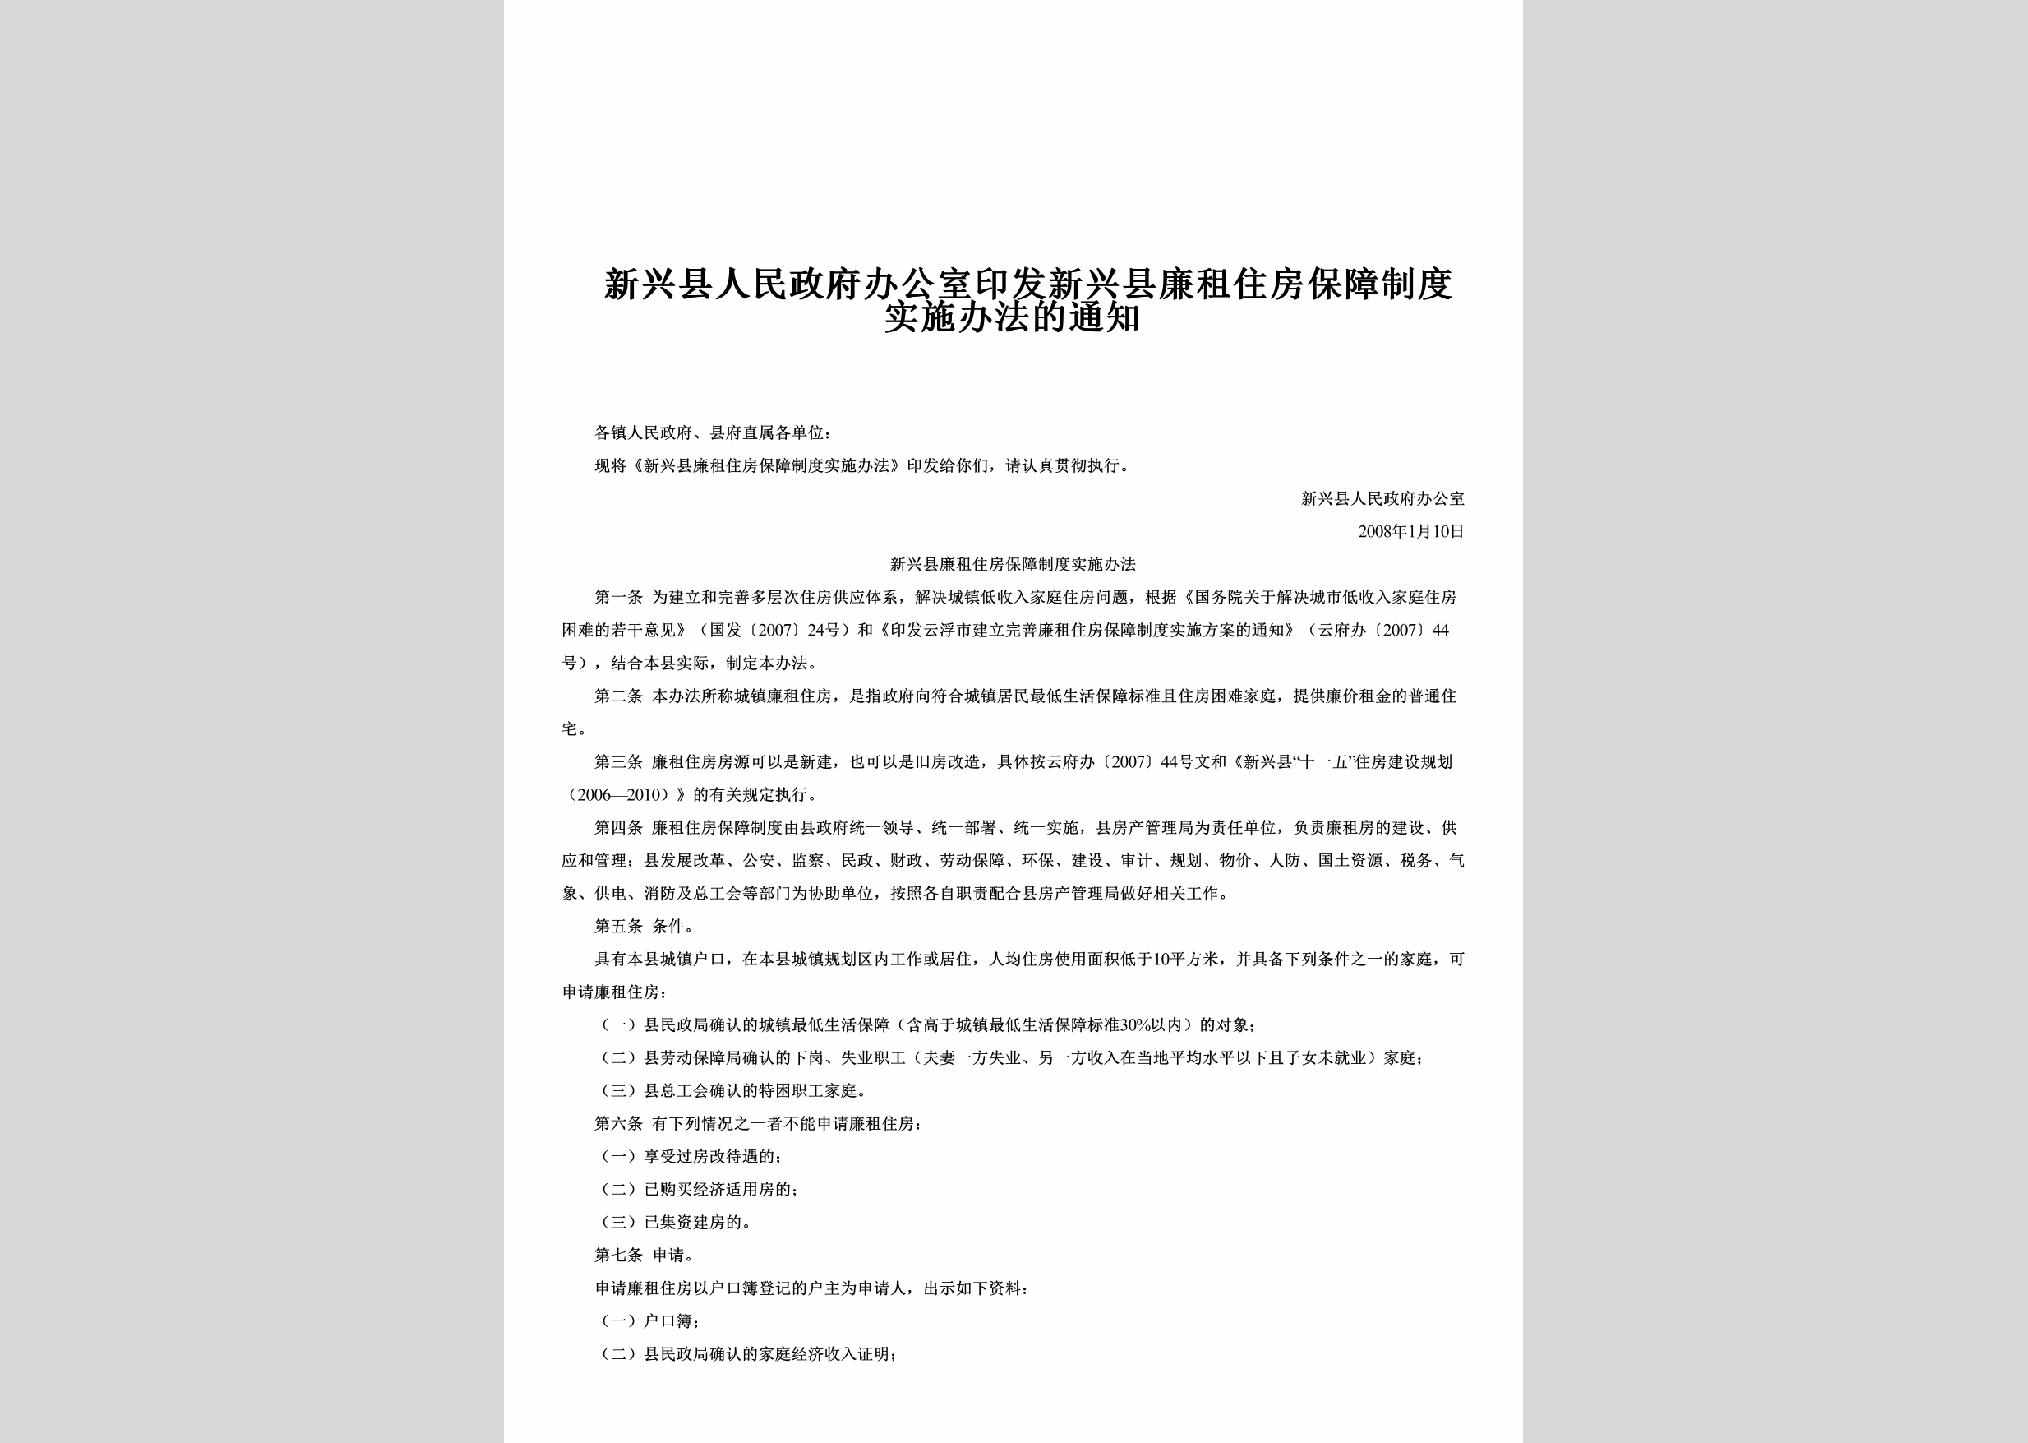 GT-YFXXXLZZ-2008：印发新兴县廉租住房保障制度实施办法的通知